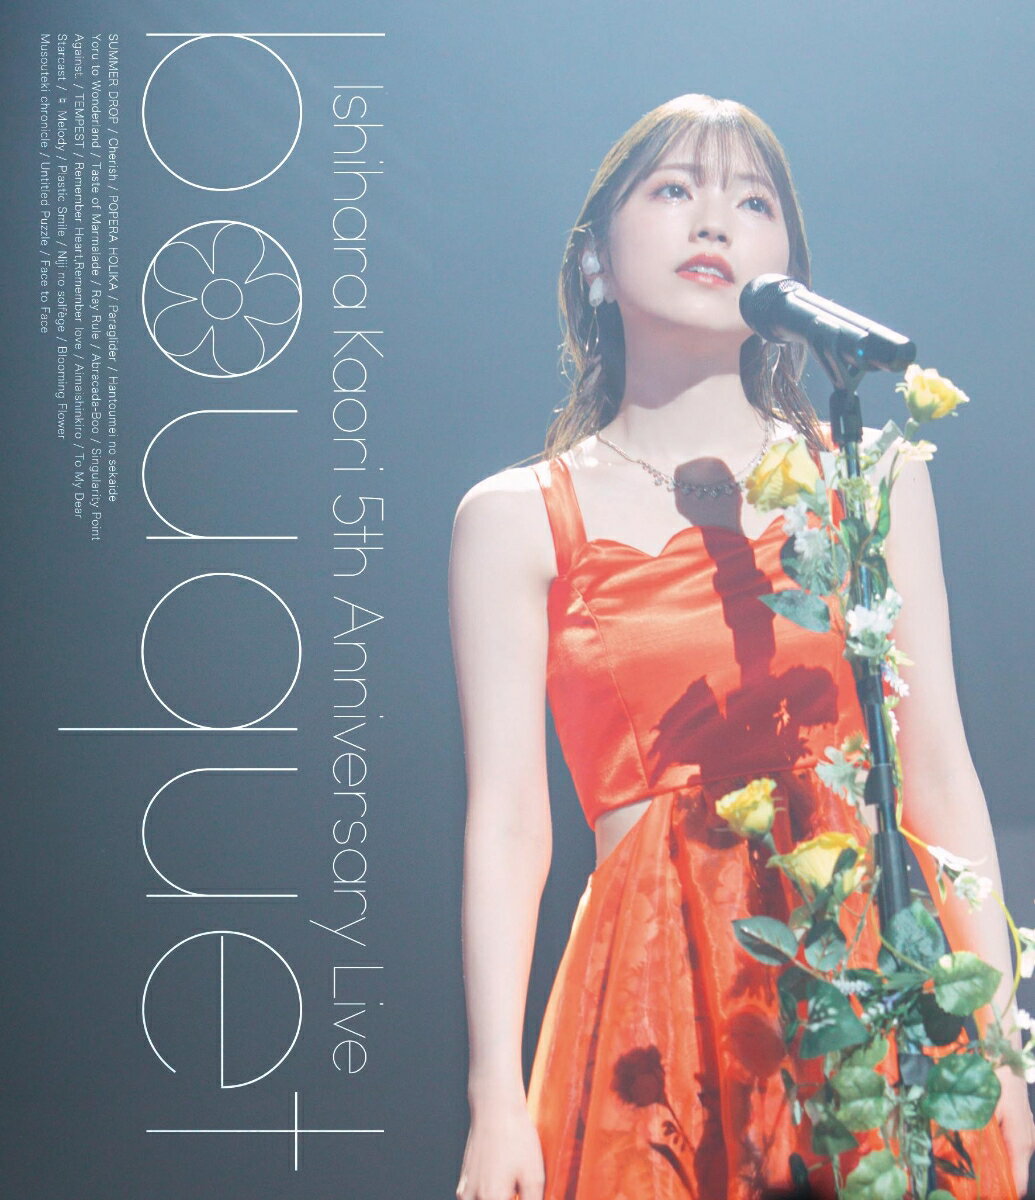 石原夏織 5th Anniversary Live -bouquet-【通常版】【Blu-ray】 [ 石原夏織 ]